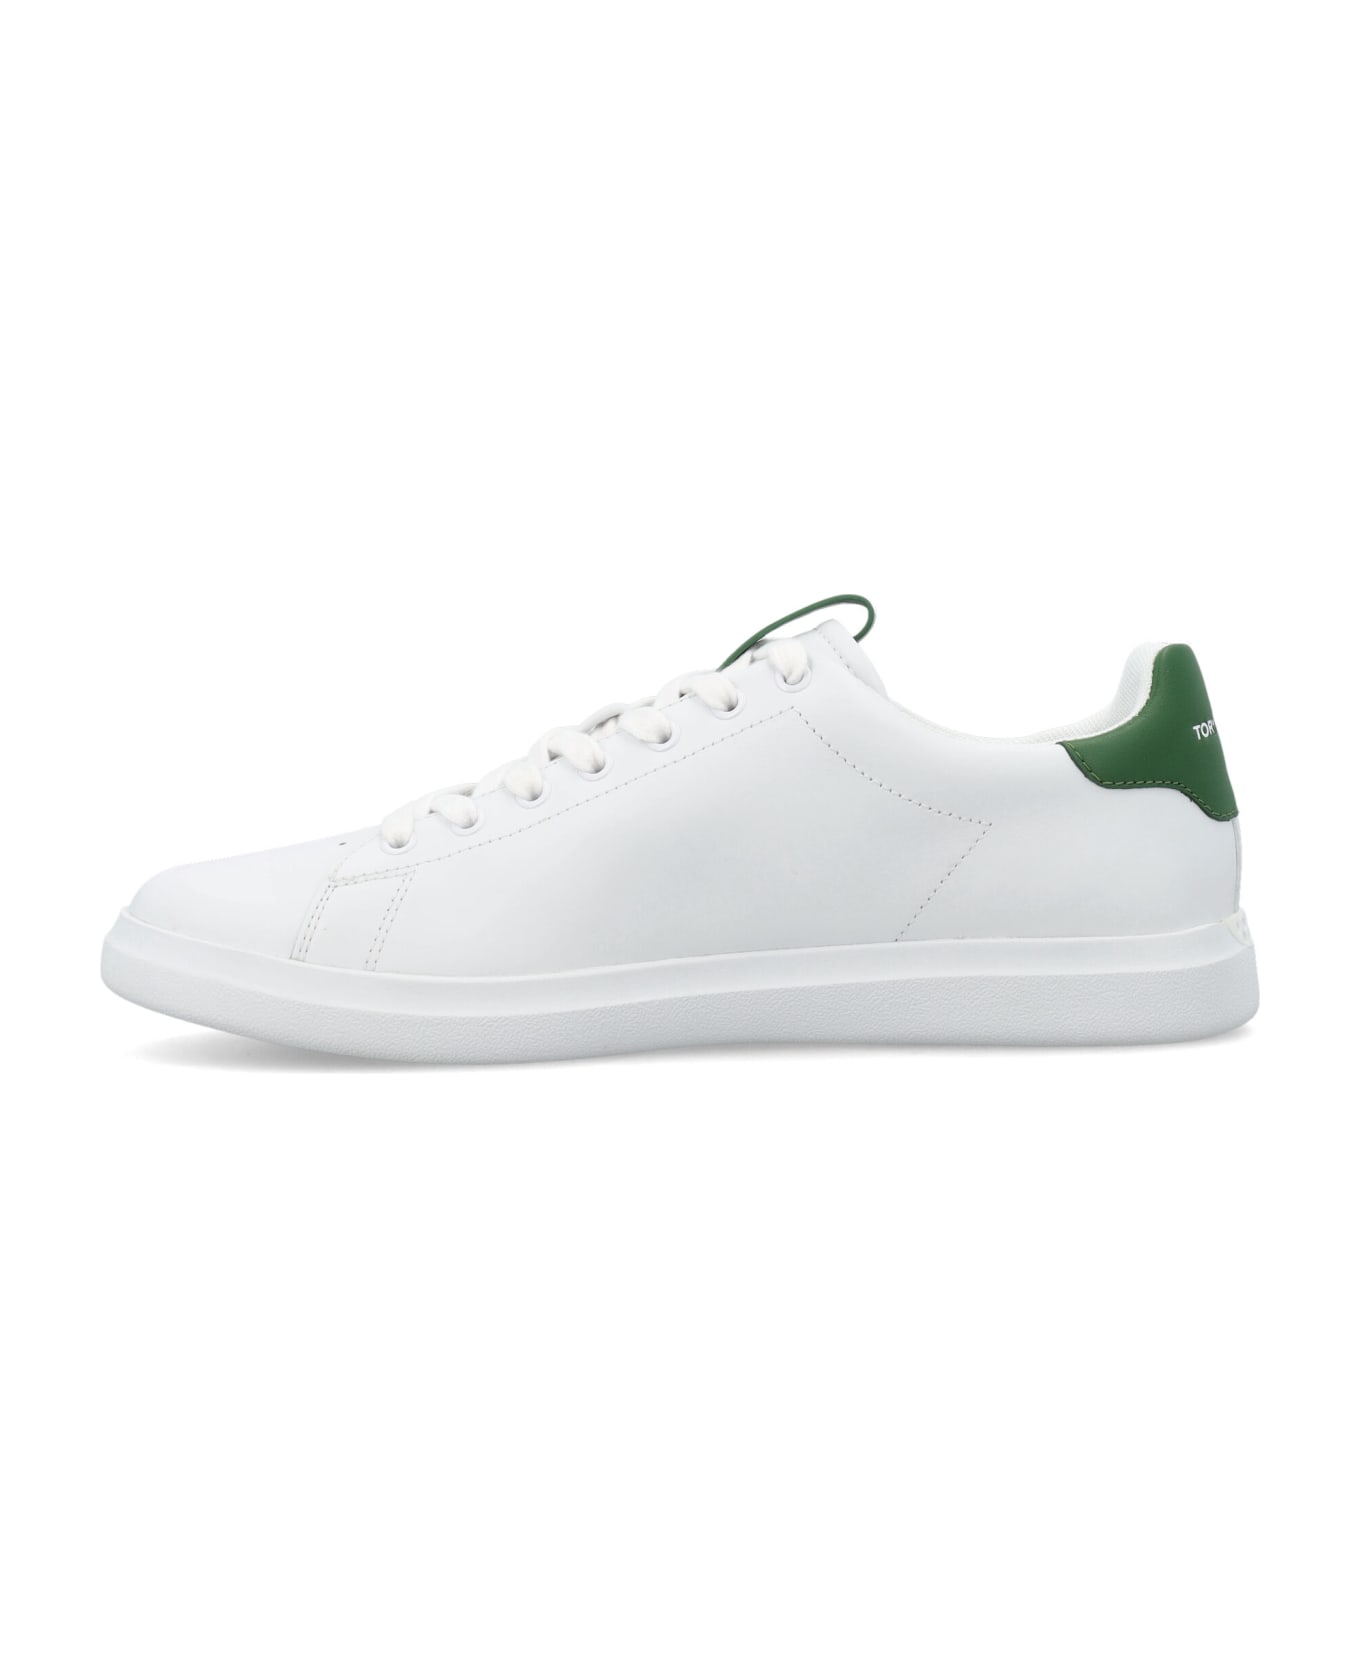 Tory Burch Howell Court Sneakers - WHITE/ARUGULA GREEN